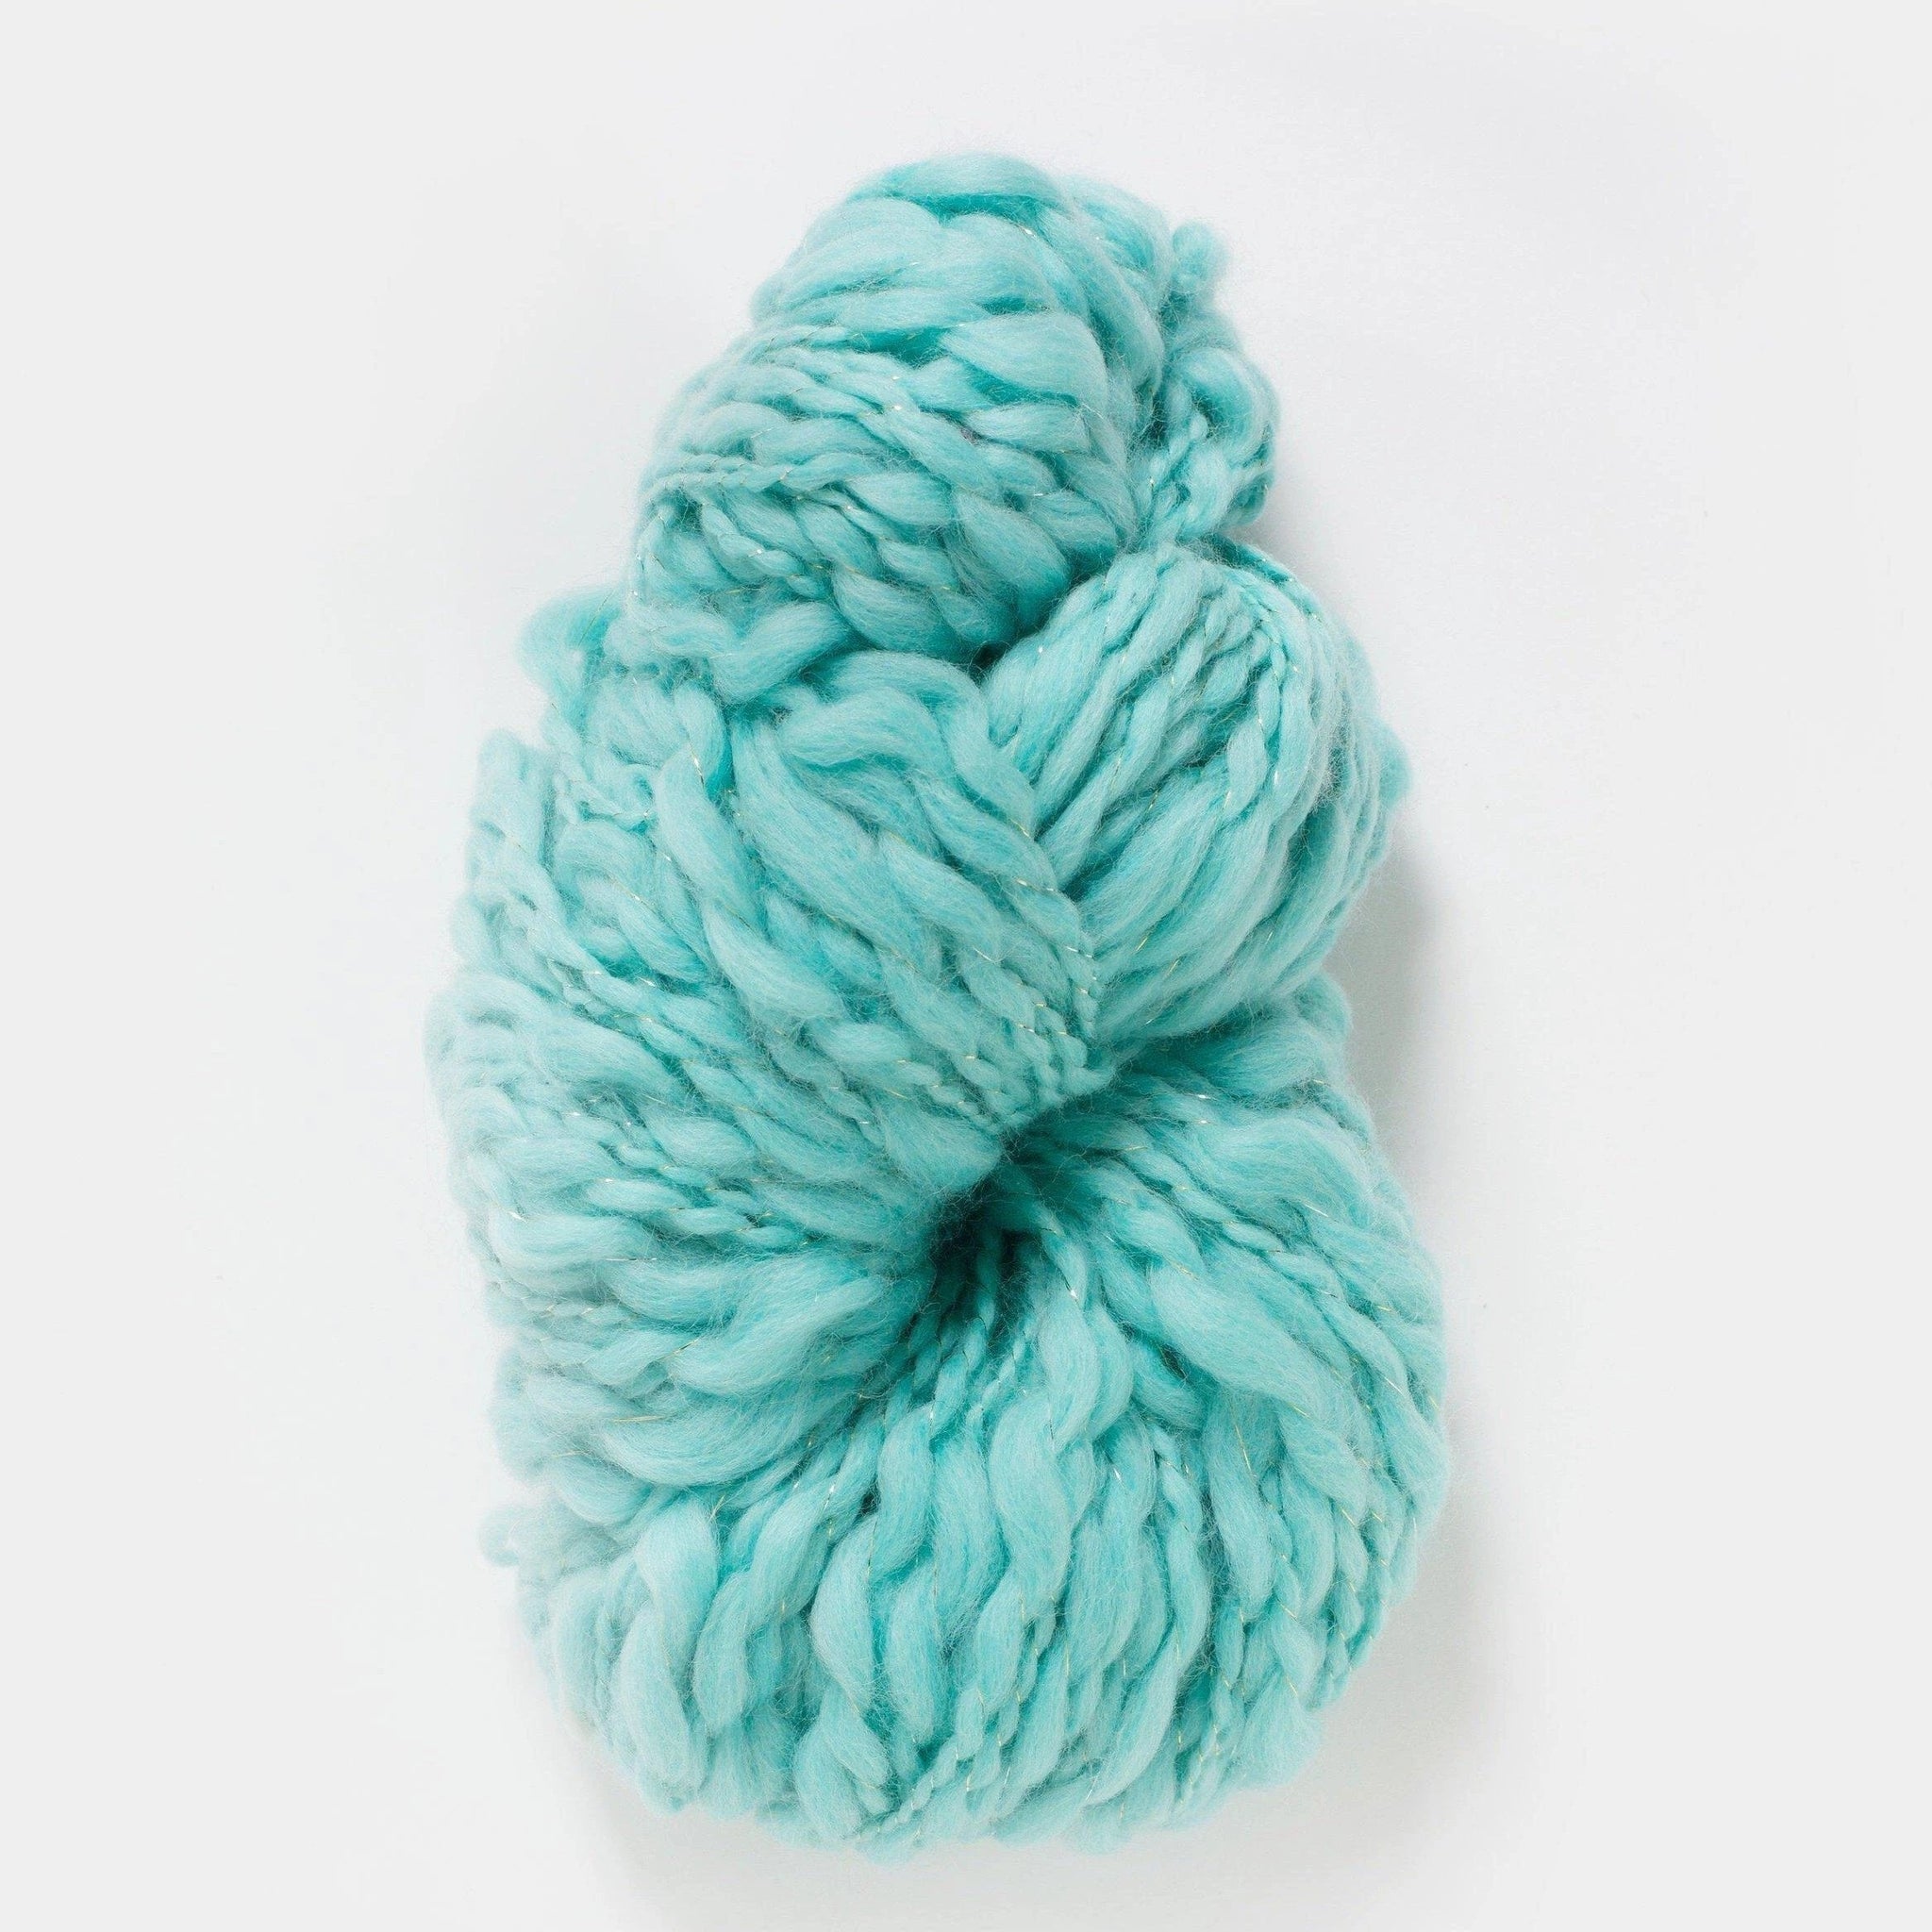 Knit Collage - Spun Cloud - Blue My Mind - gatherhereonline.com